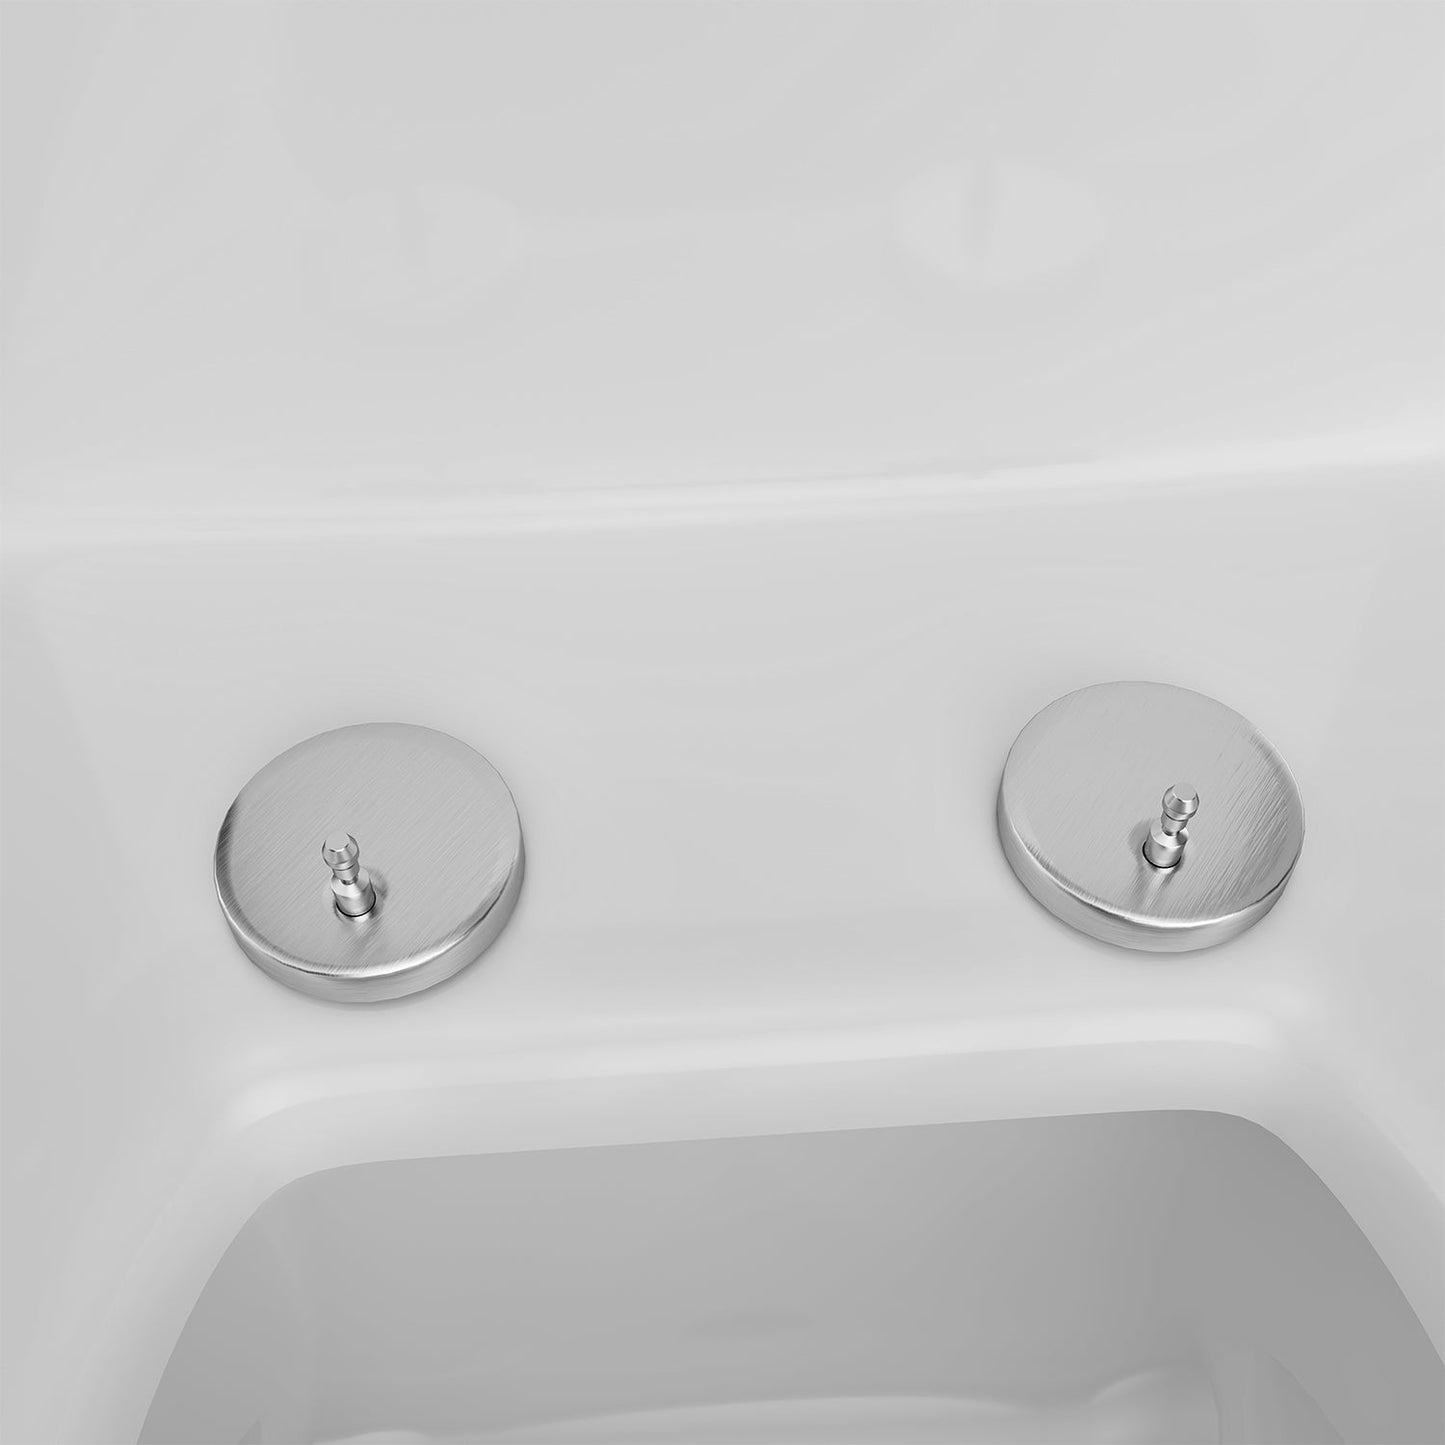 Eviva Lassen One Piece Toilet in White